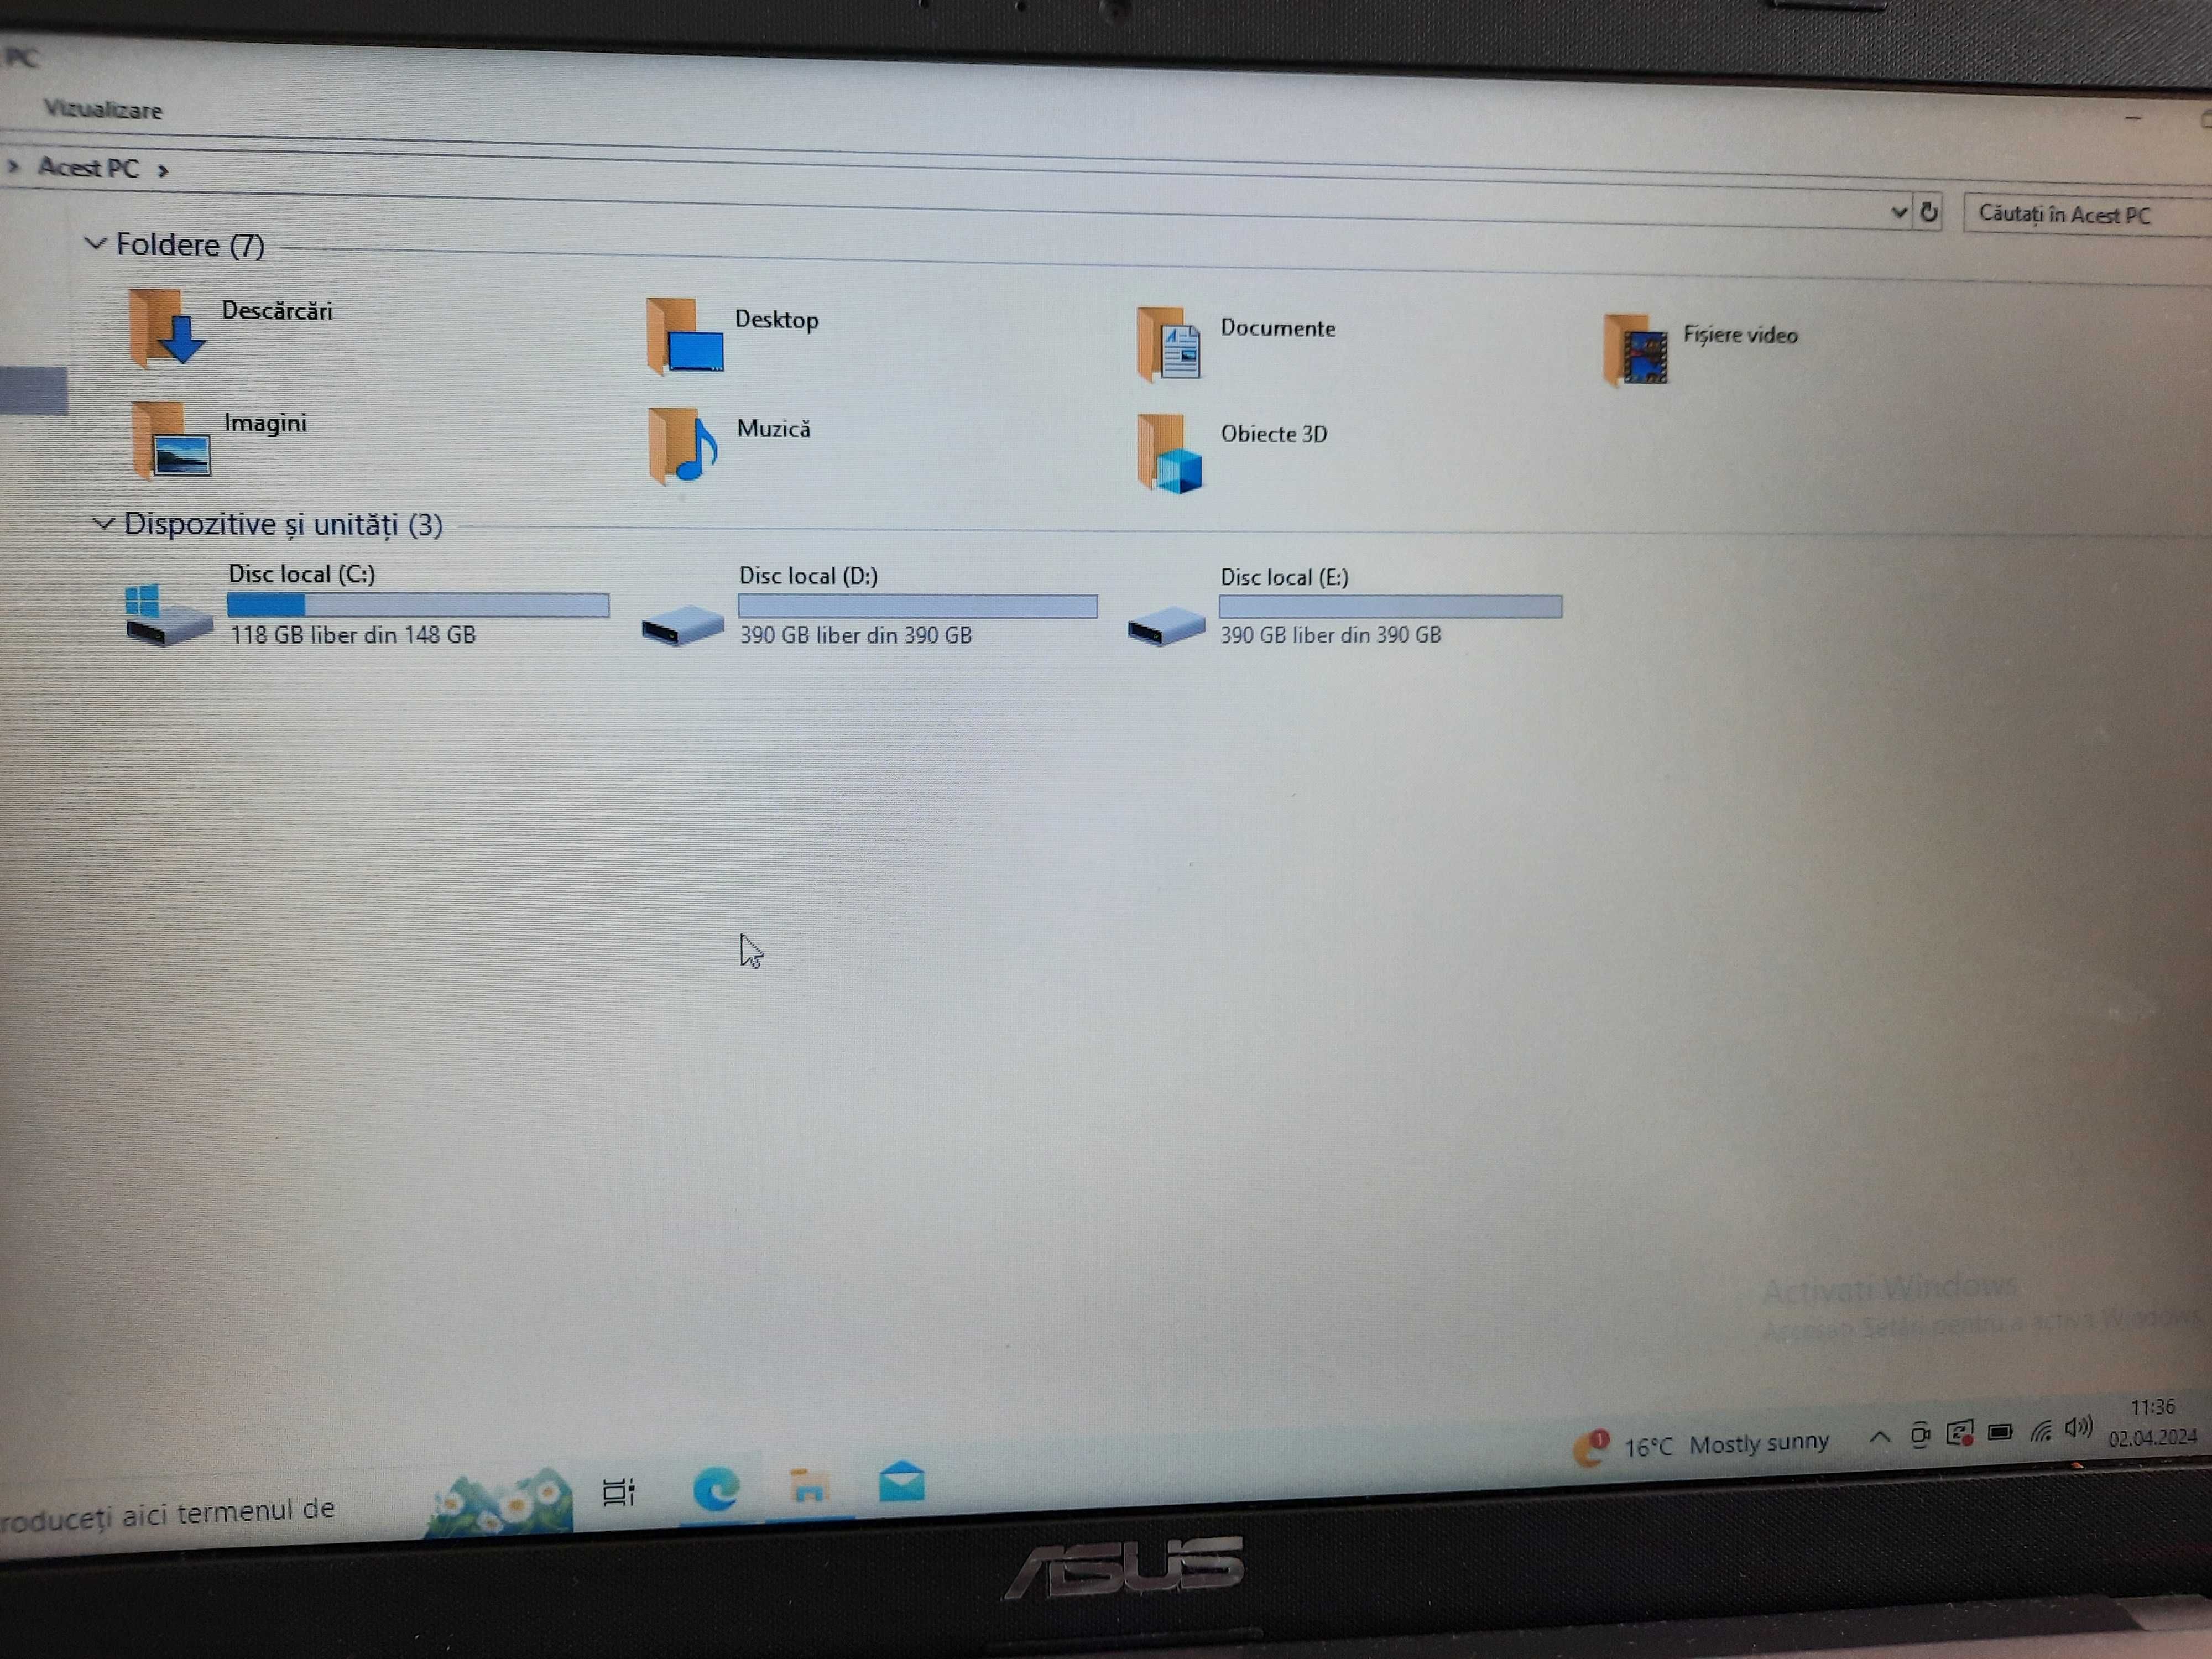 Laptop ASUS X515MA Intel Pentium Silver N5030 > 3.10 GHz, 4GB, 1TB HDD